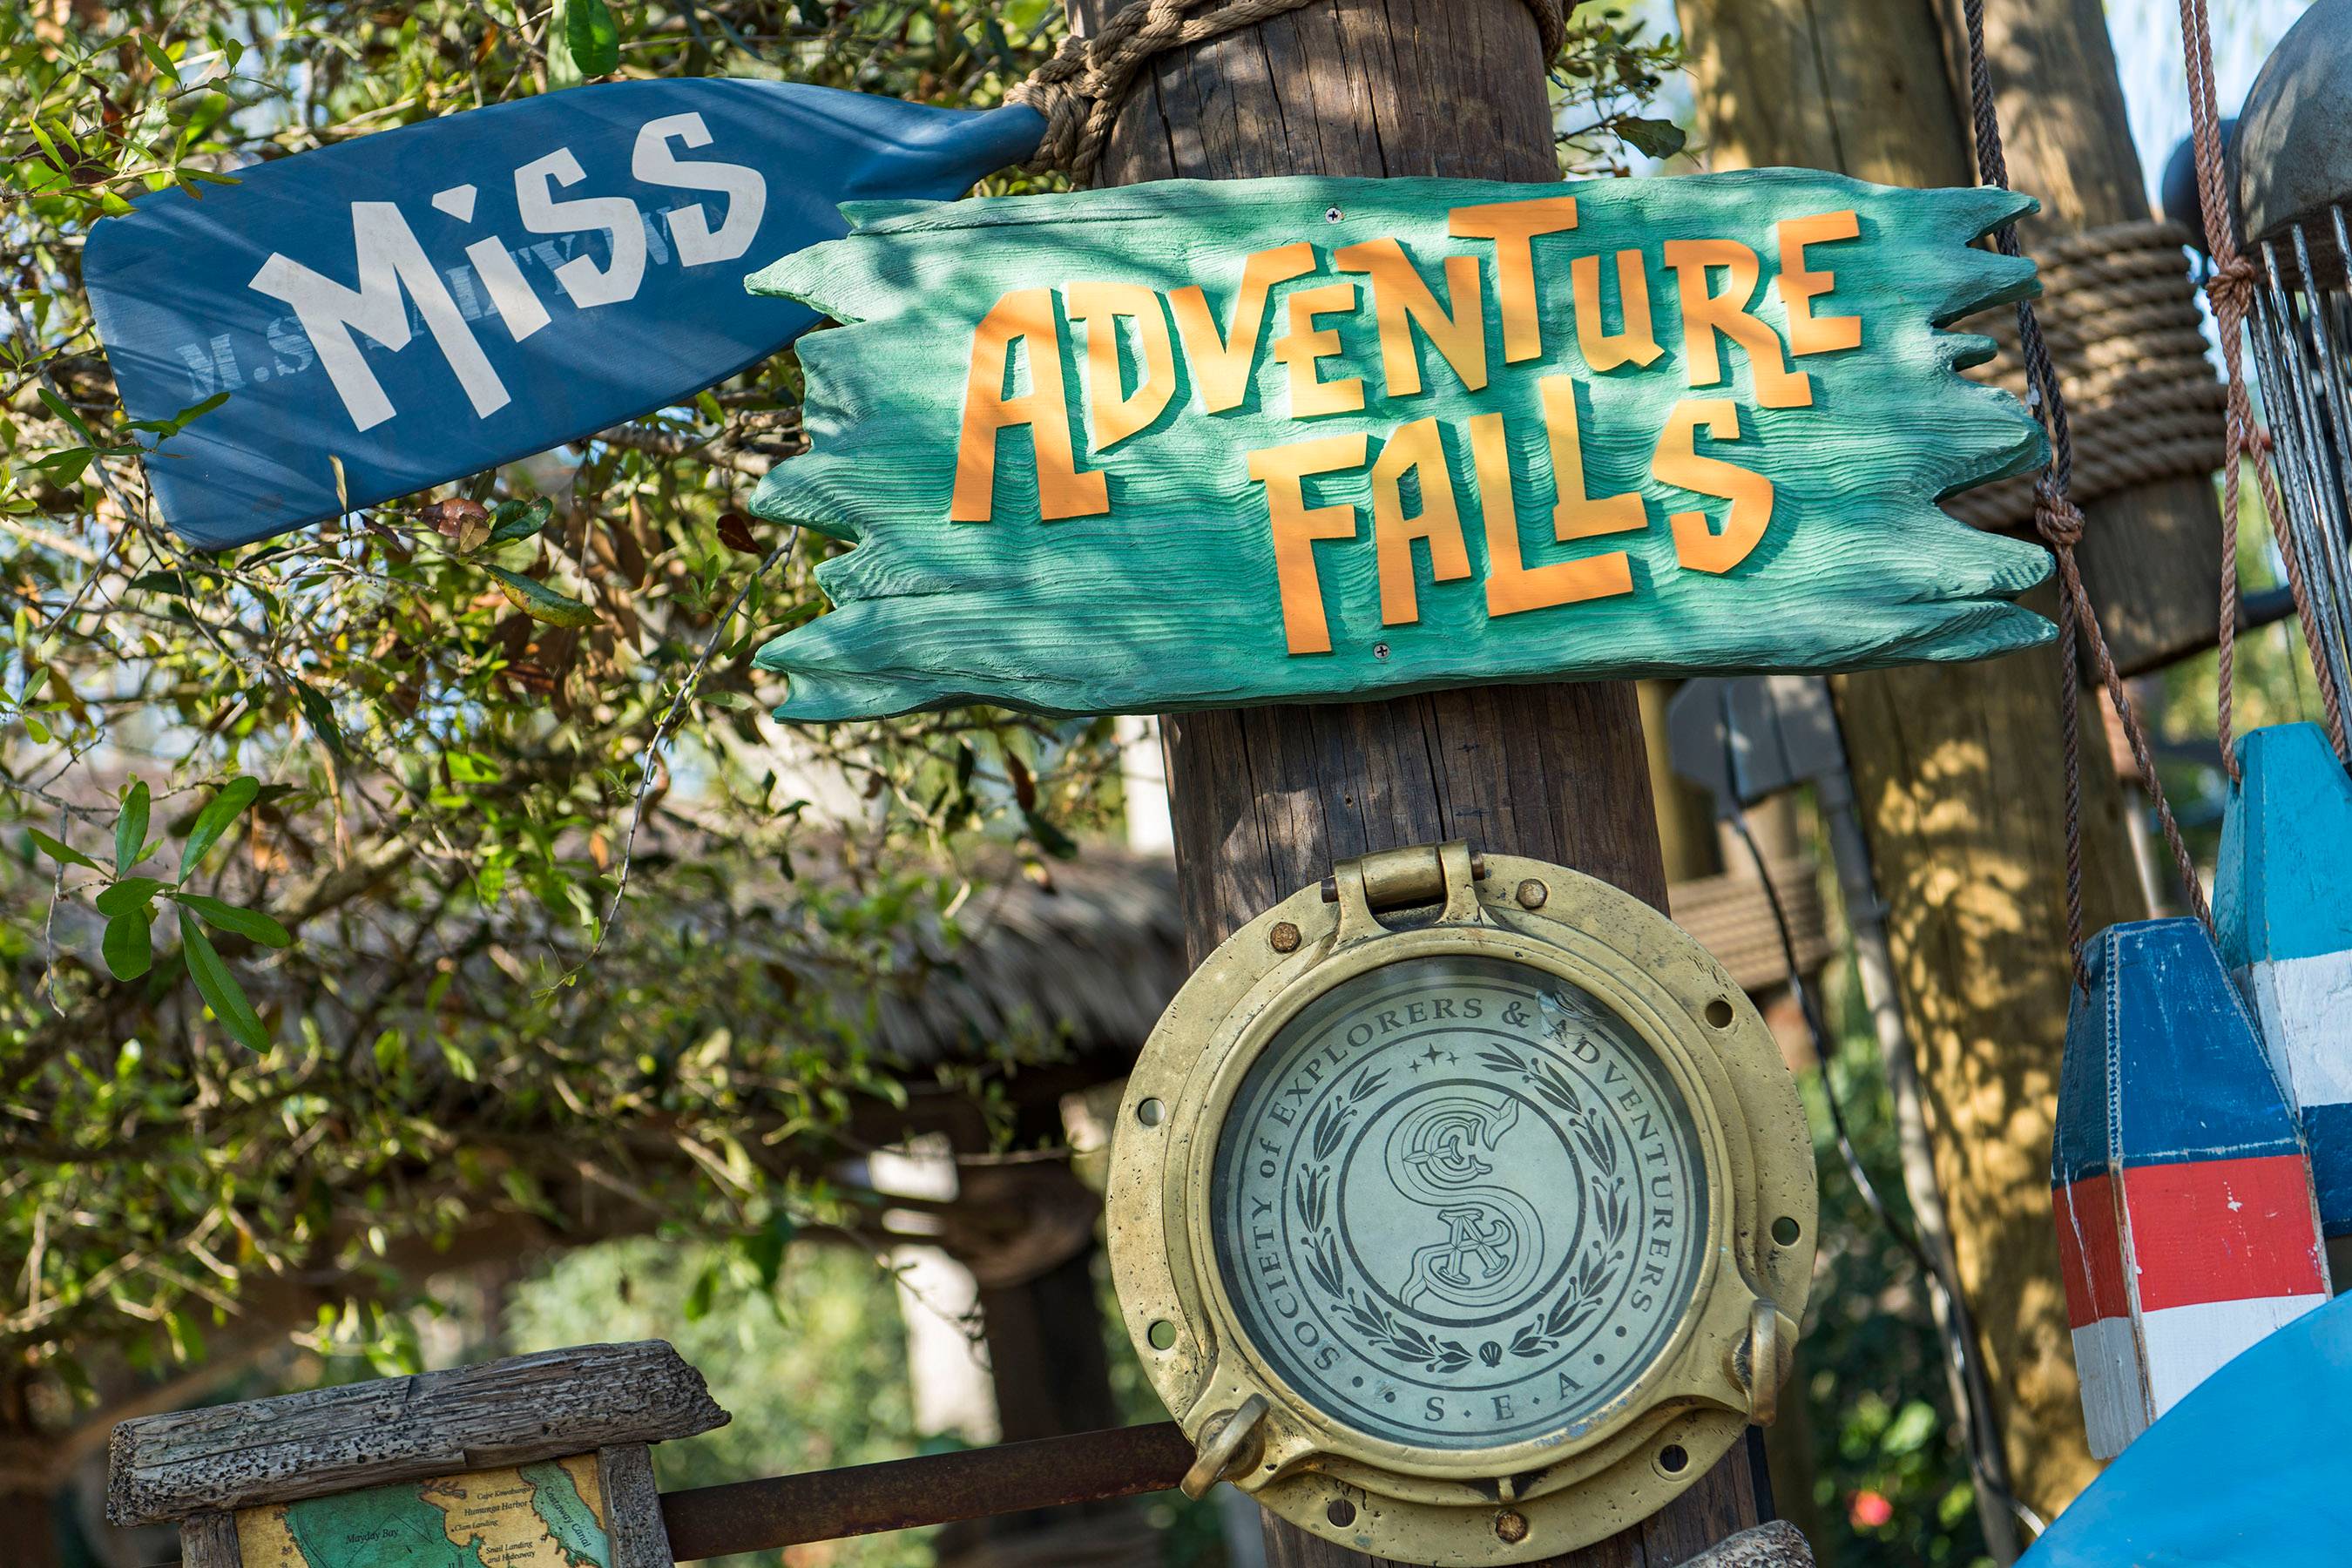 Miss Adventure Falls to open March 12 at Typhoon Lagoon